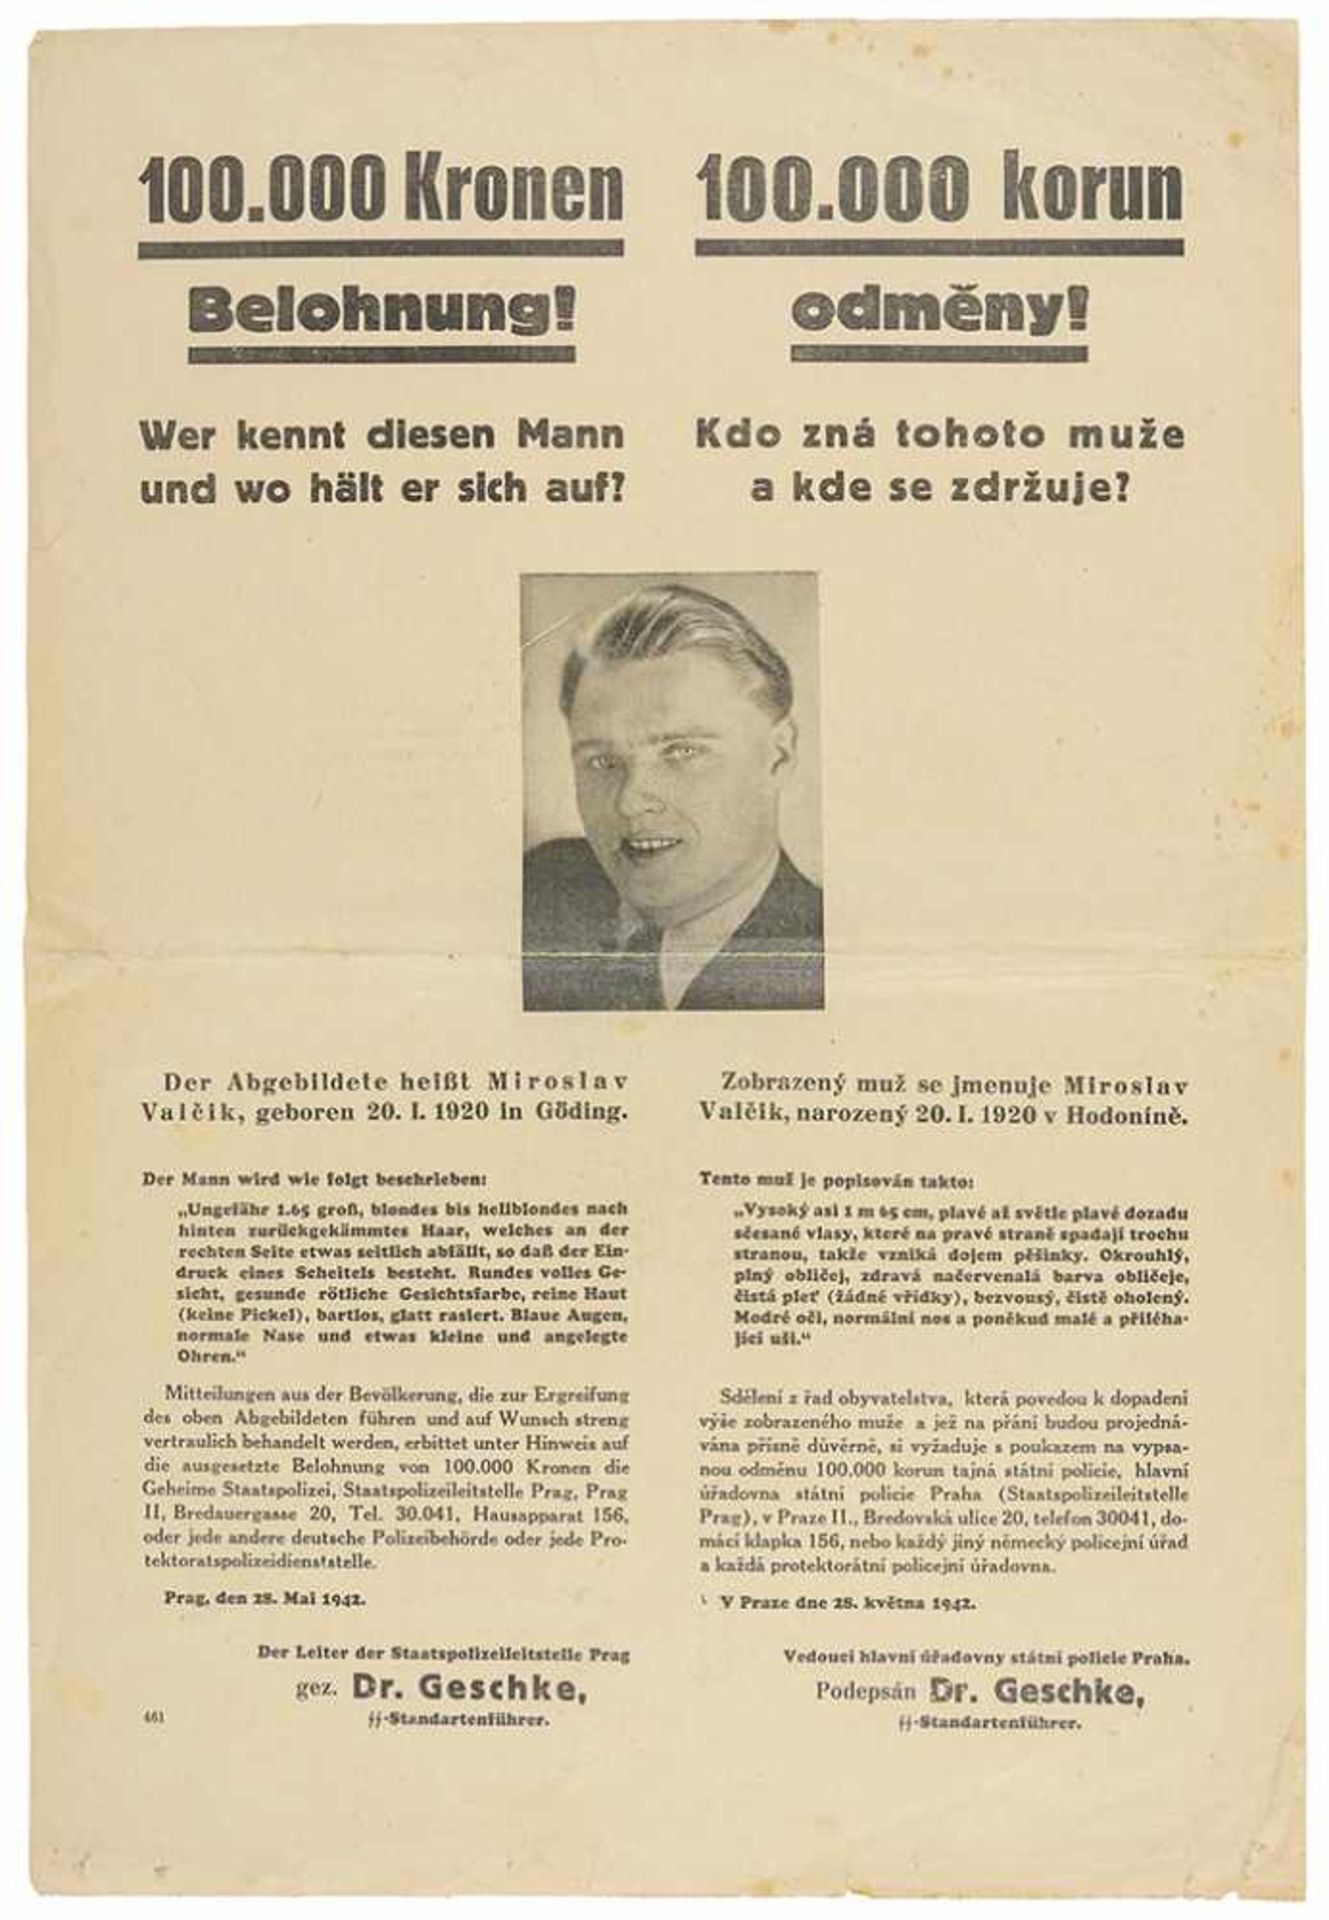 Nationalsozialismus - - Fahndungsplakat von Miroslav Valcik (das ist: Josef Valcik). P